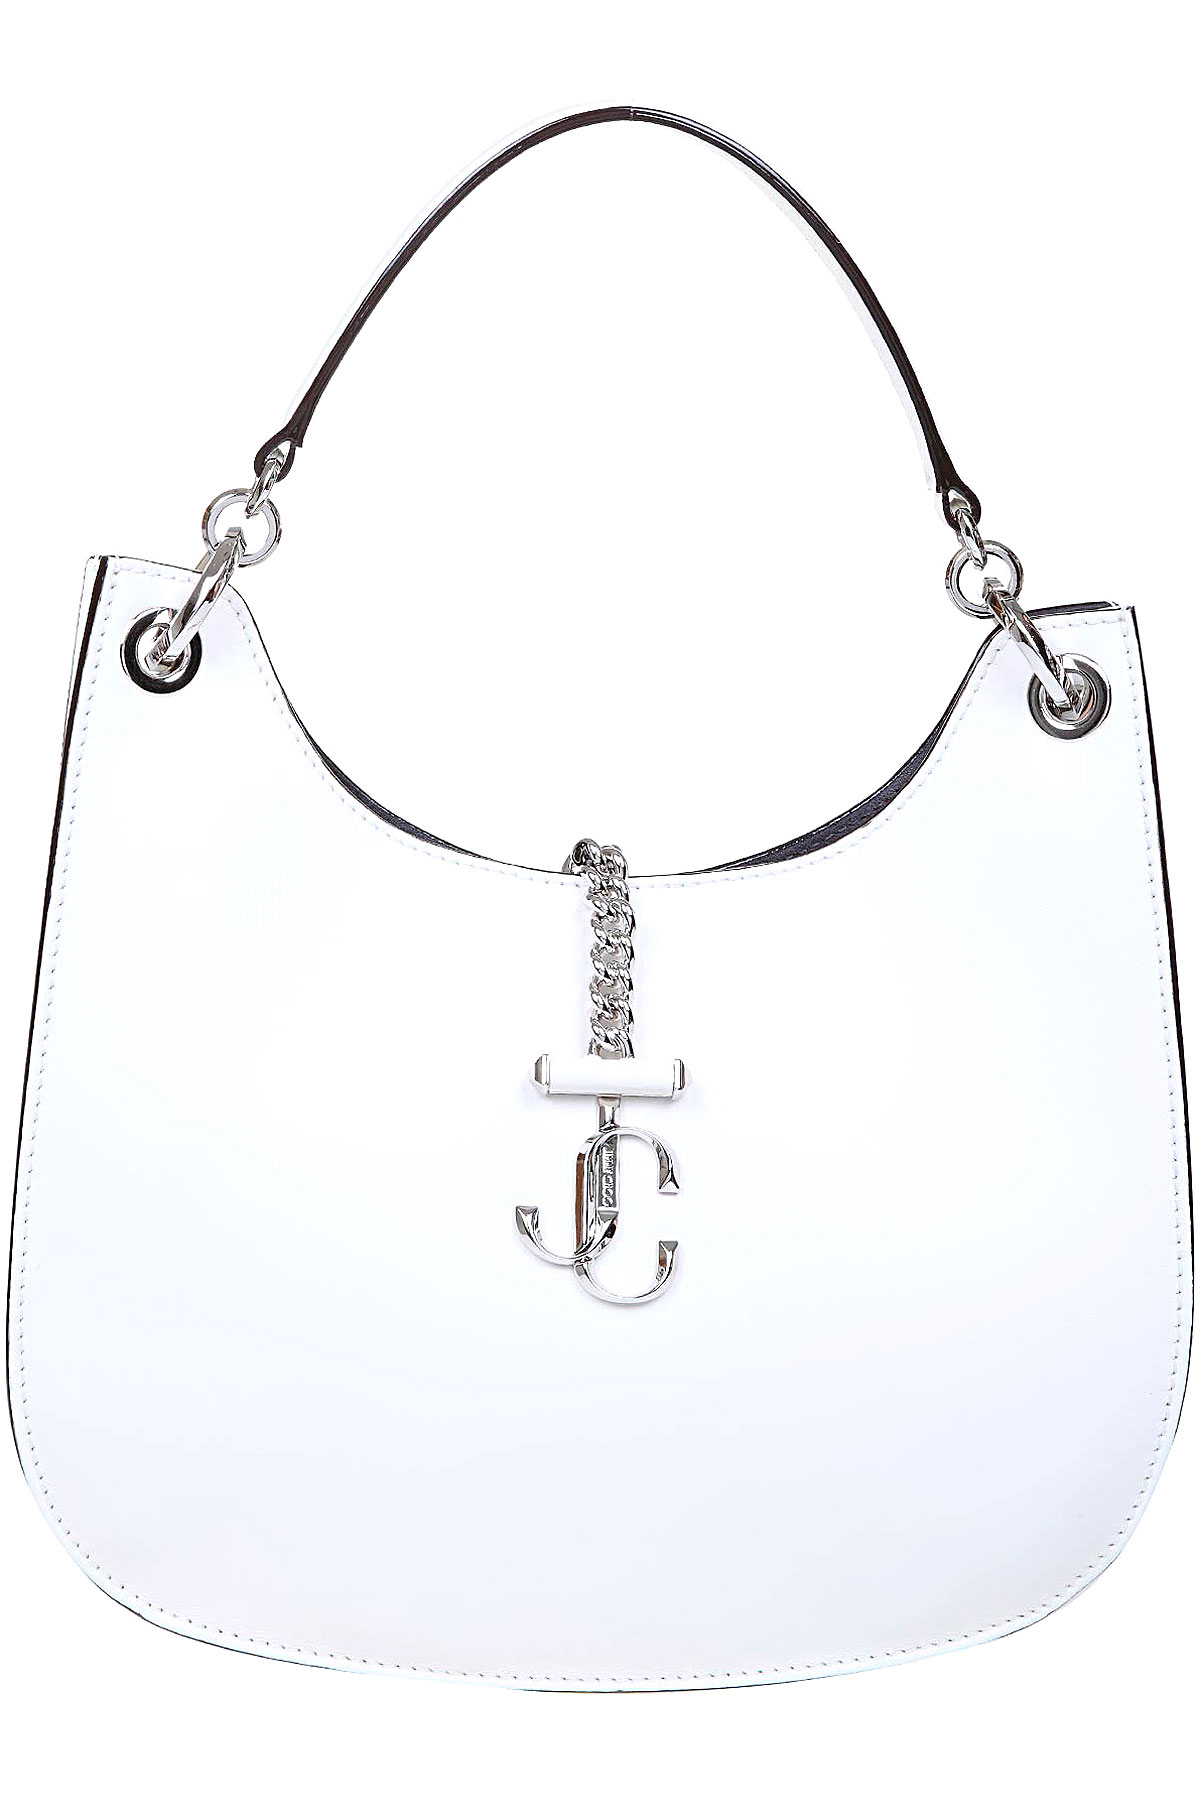 Handbags Jimmy Choo, Style code: varenne-hobo-M